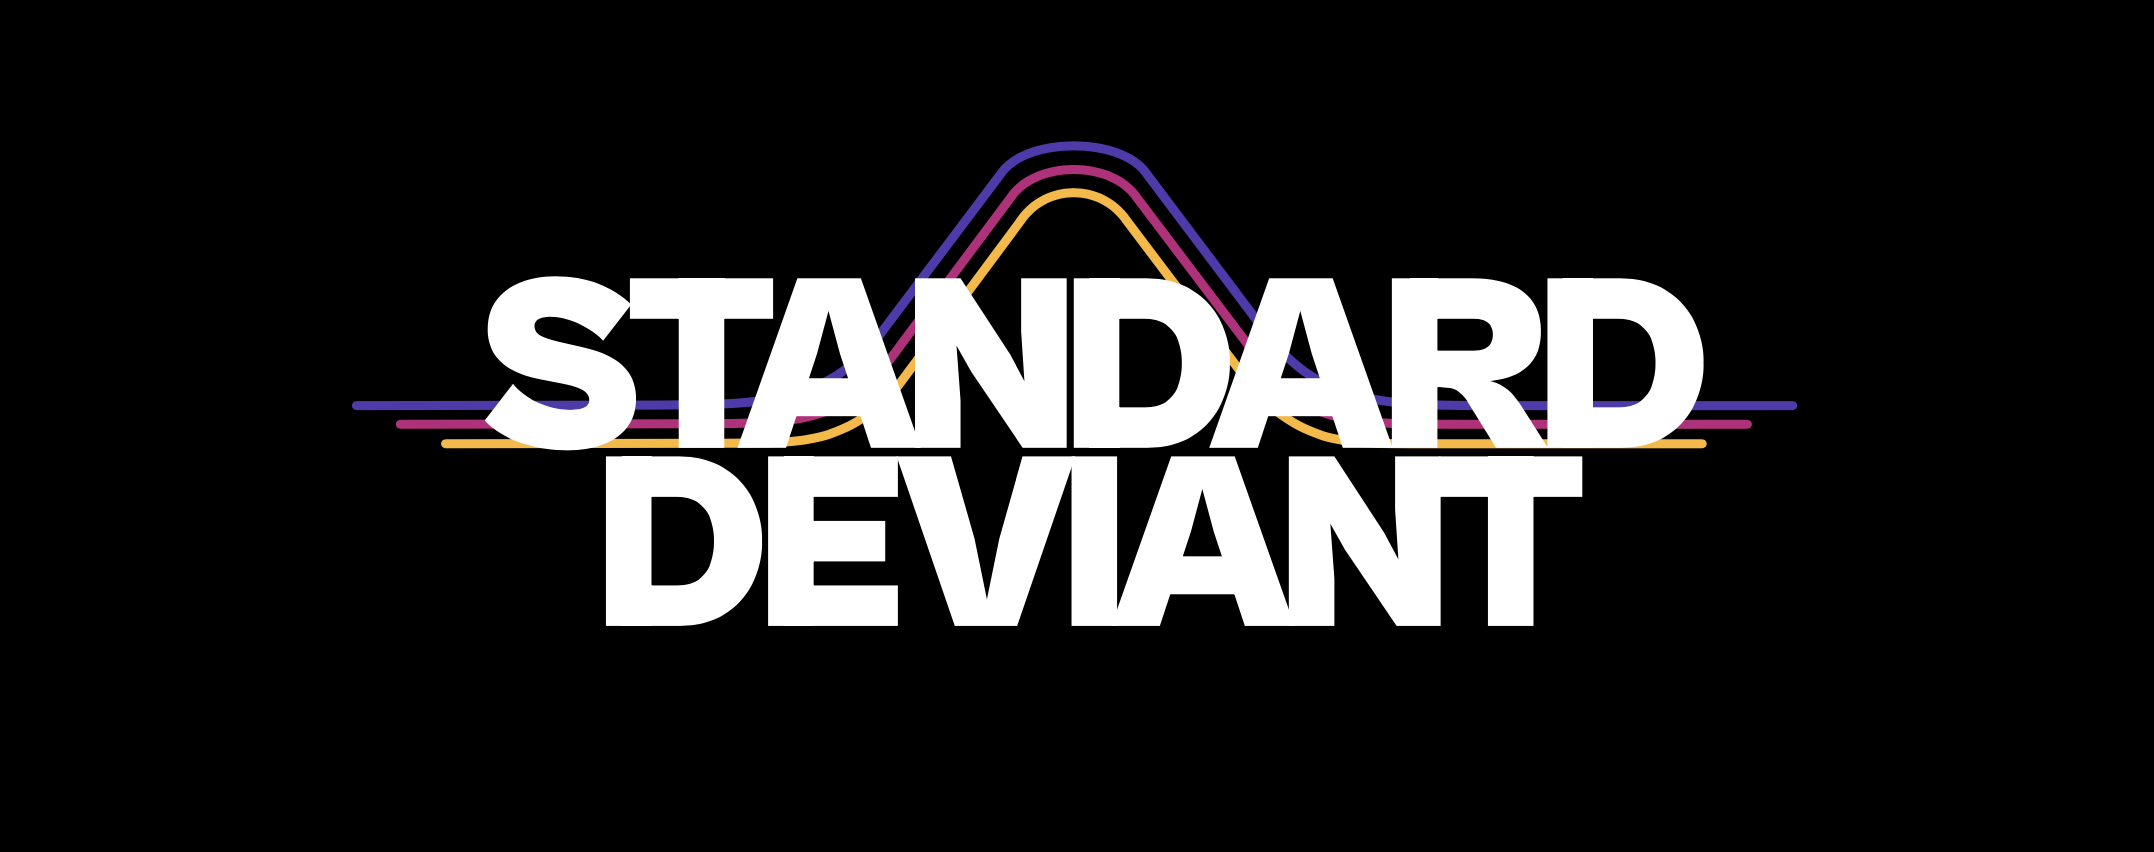 Standard Deviant\